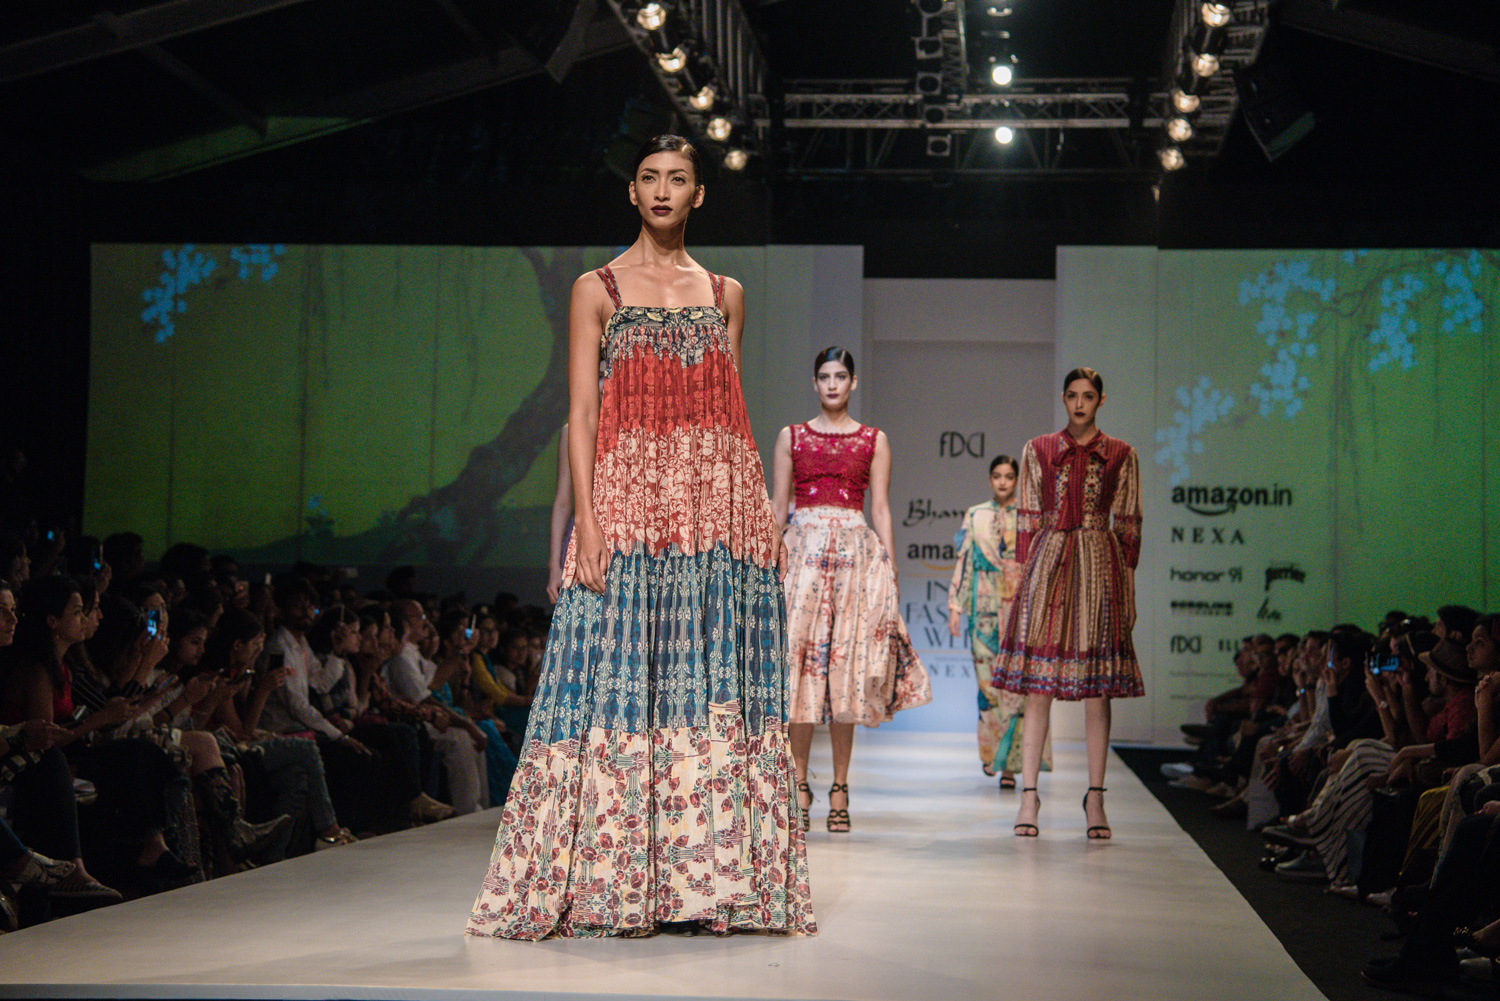 Bhanuni by Jyoti FDCI Amazon India Fashion Week Spring Summer 2018 Look Finale